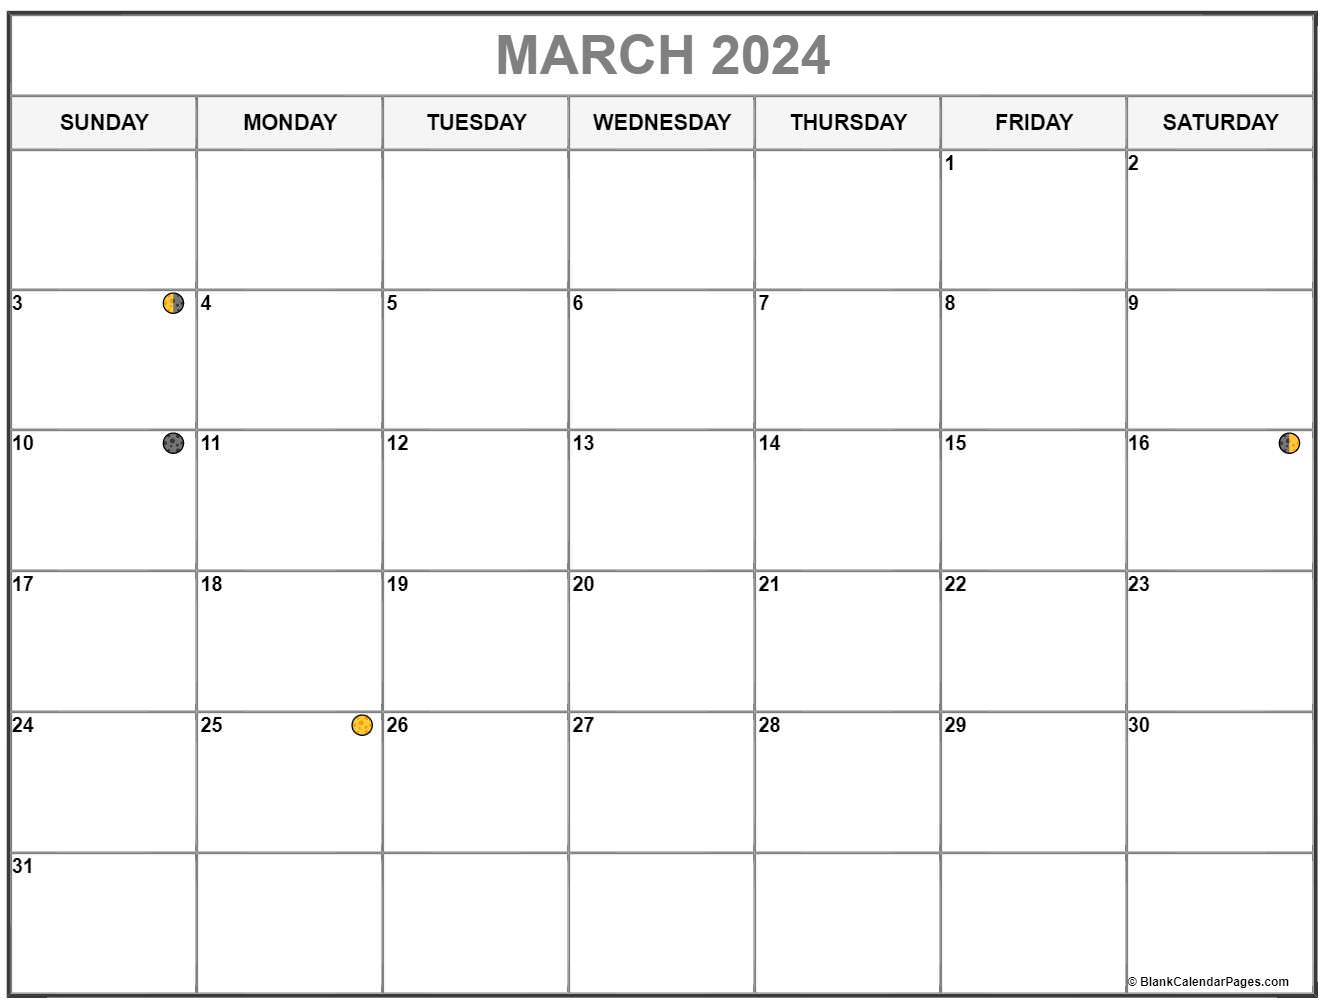 moon-phases-2023-usa-2023-calendar